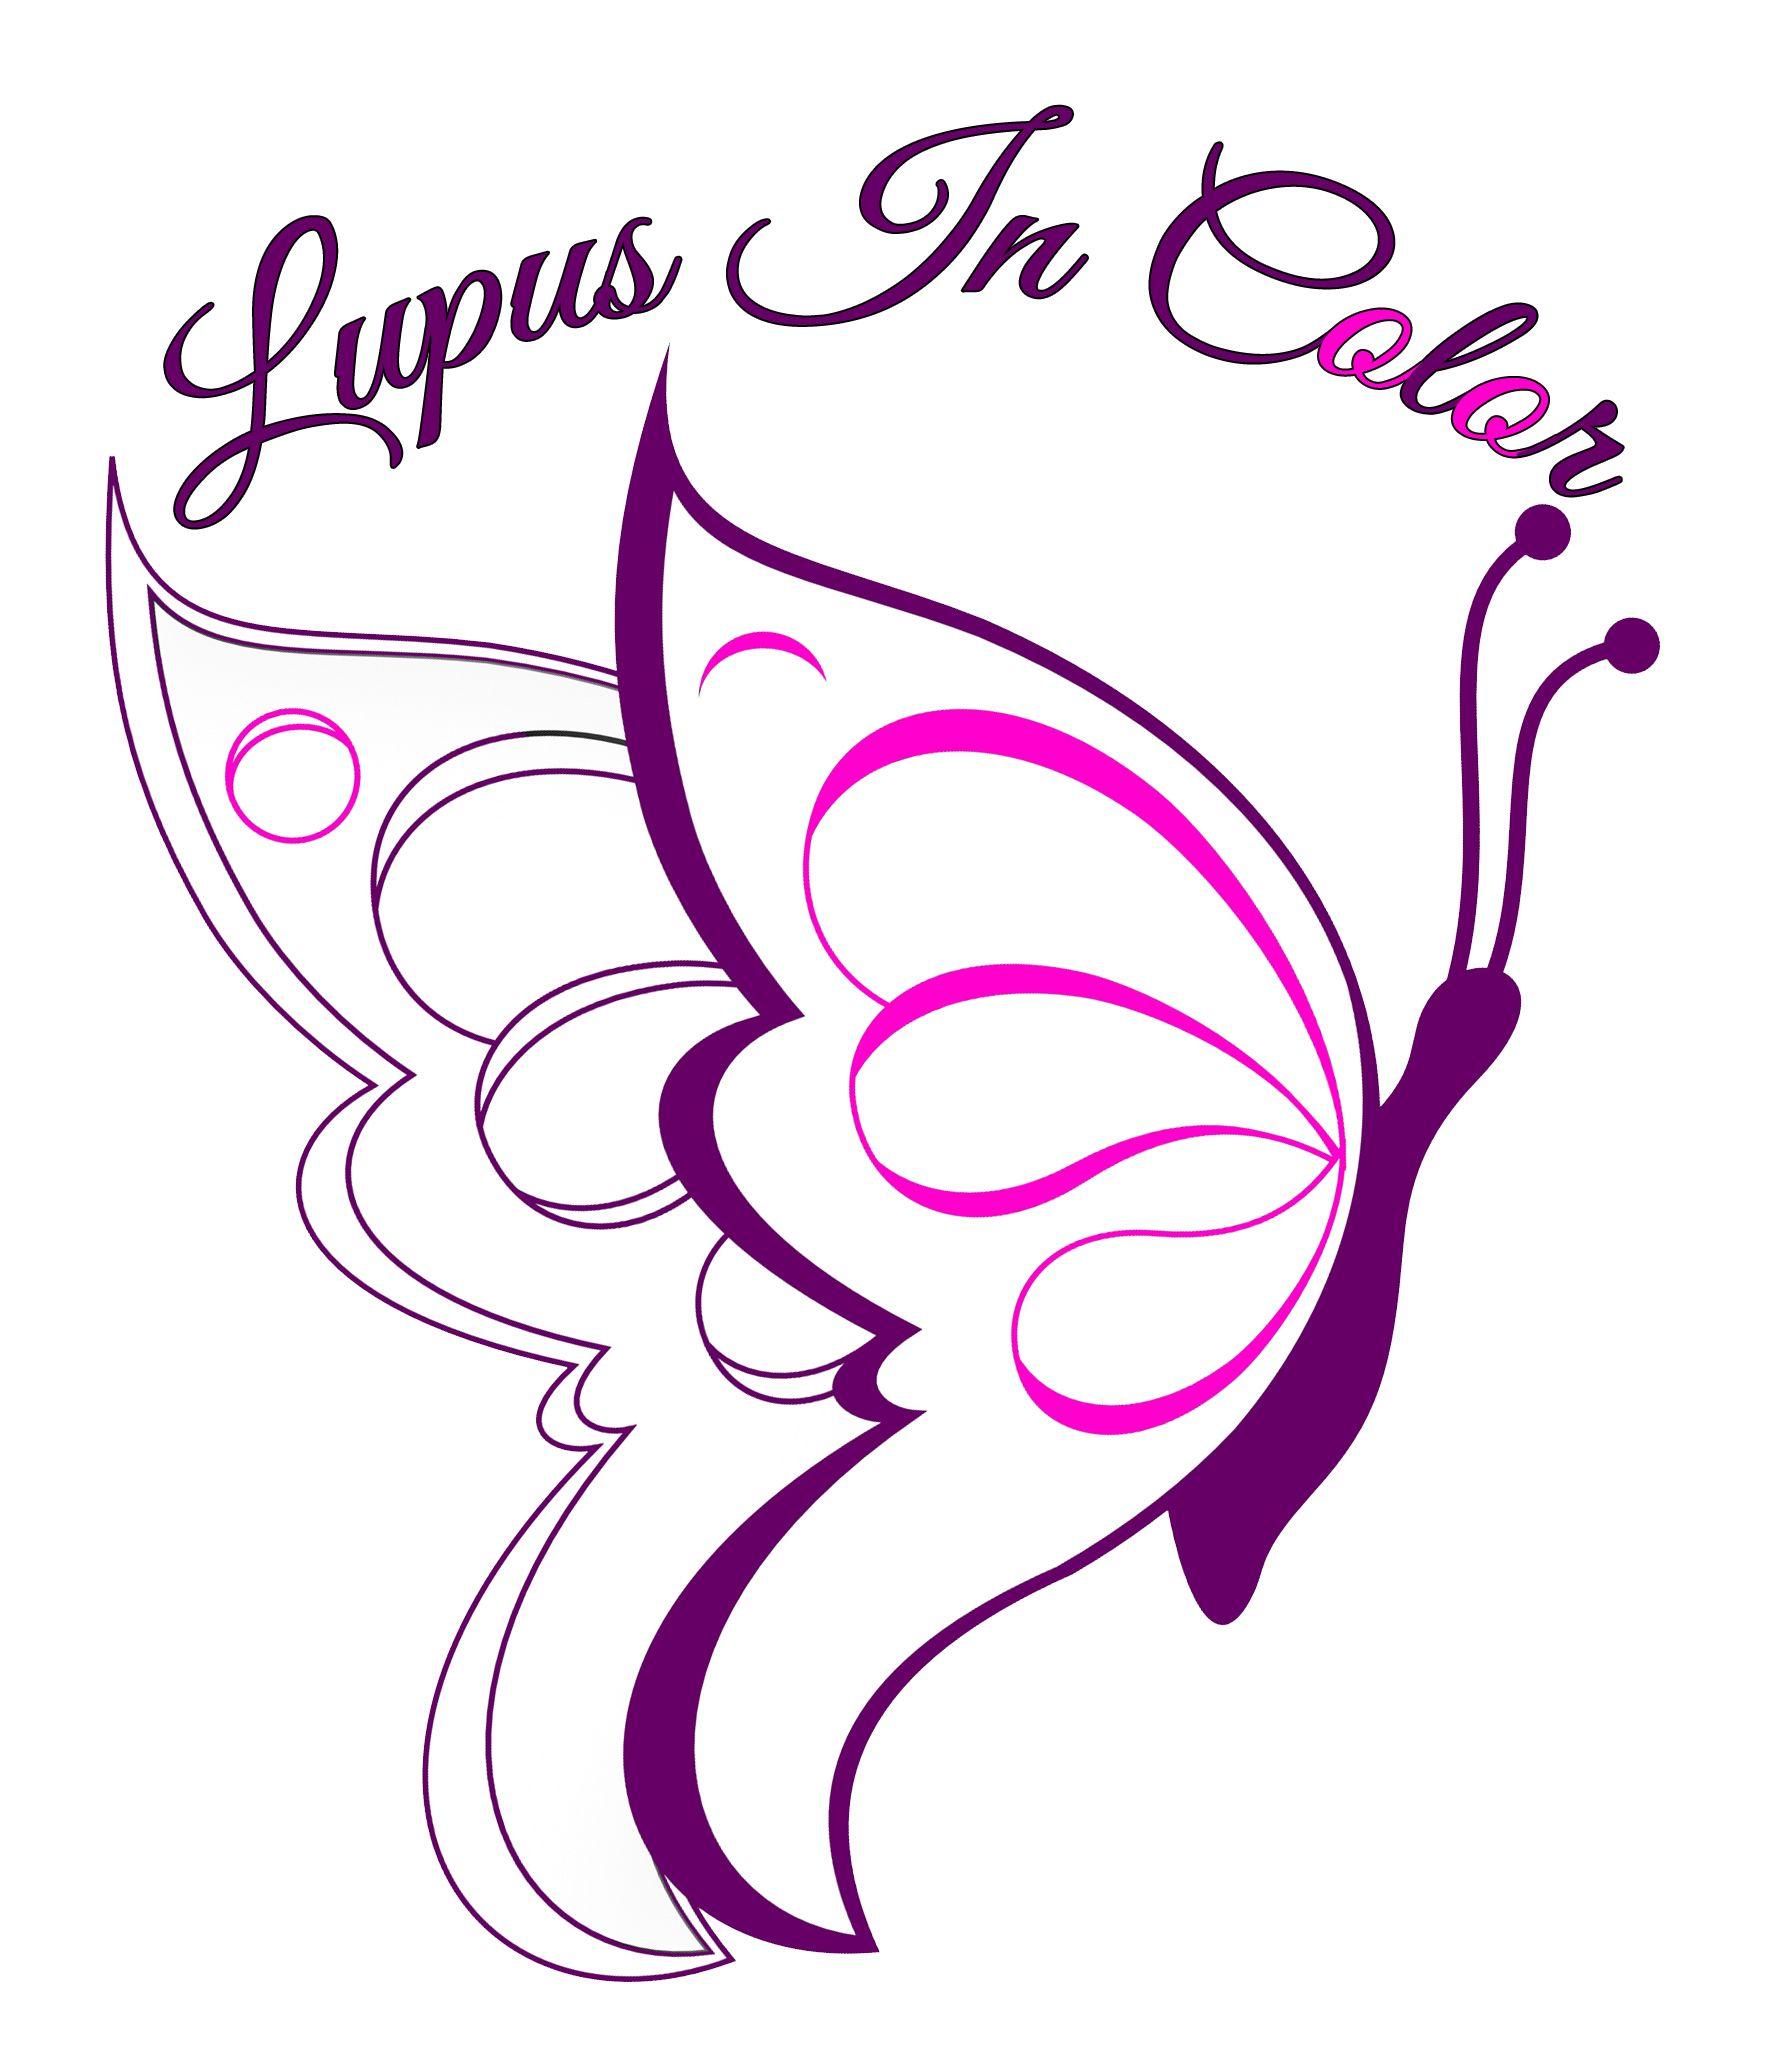 Lupus Butterfly Logo - LogoDix